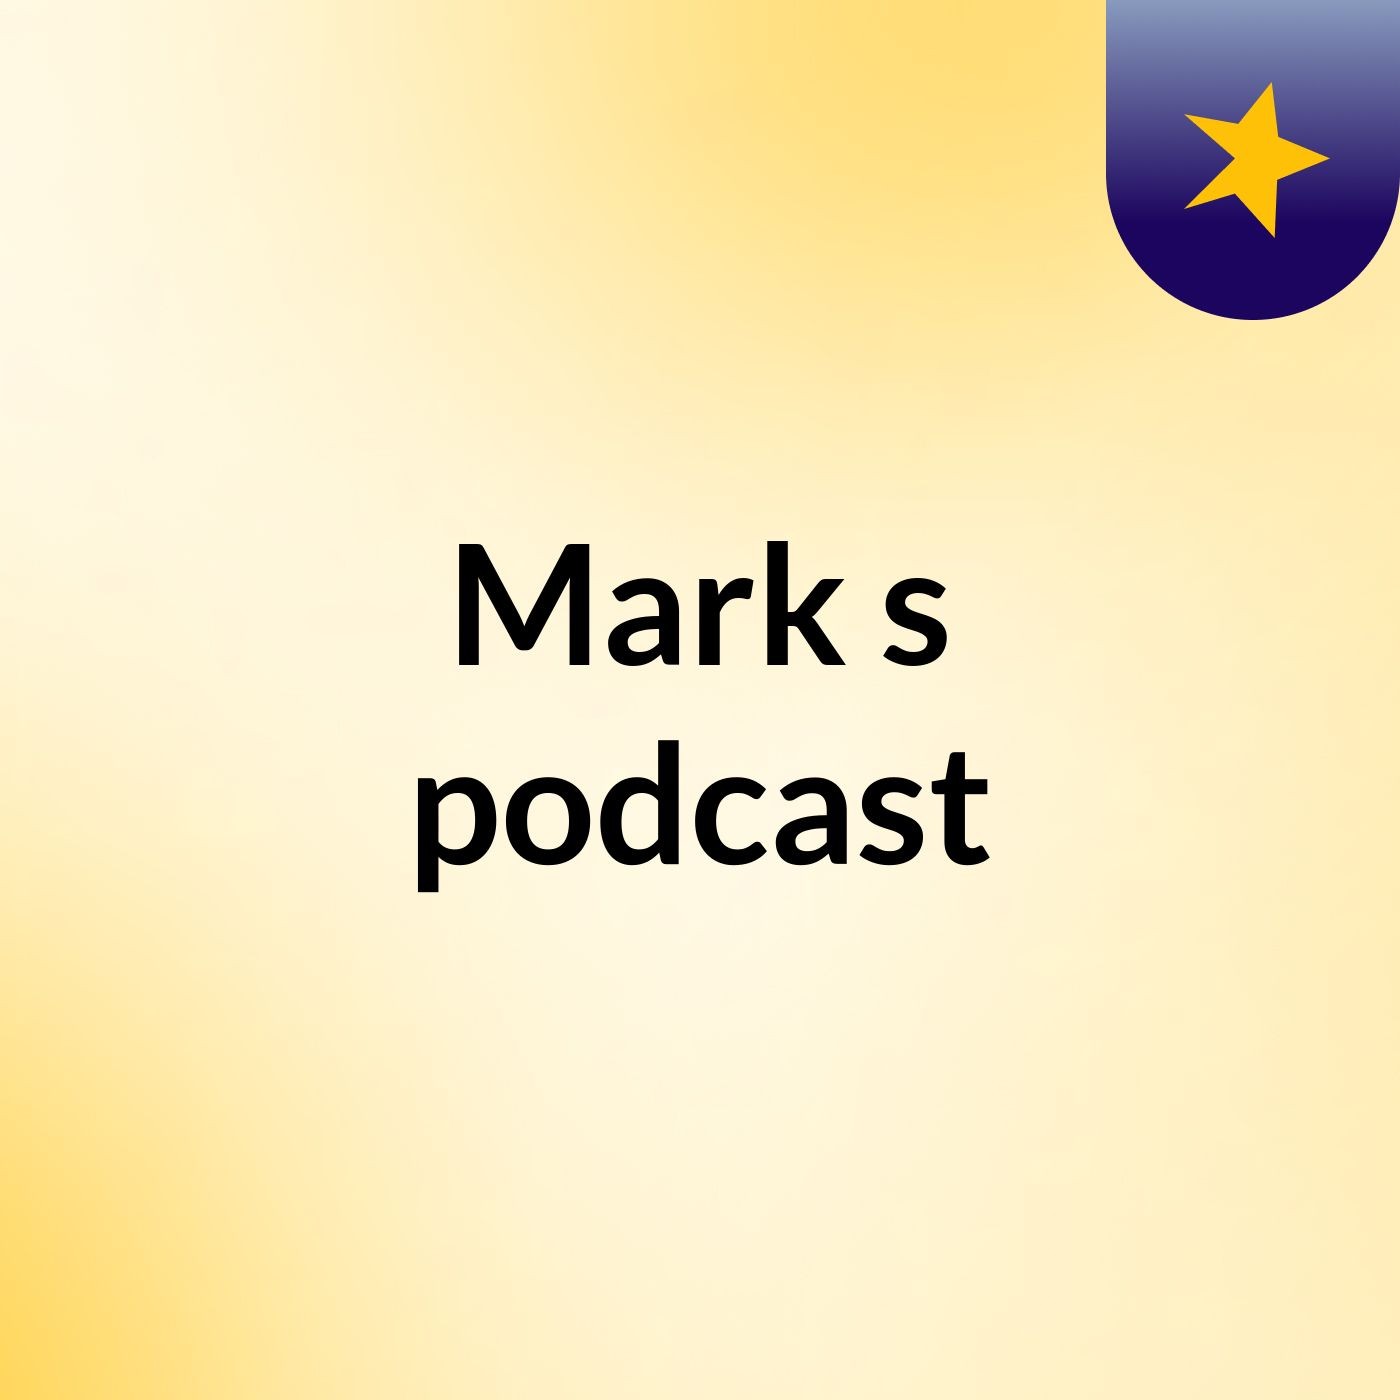 Mark's podcast